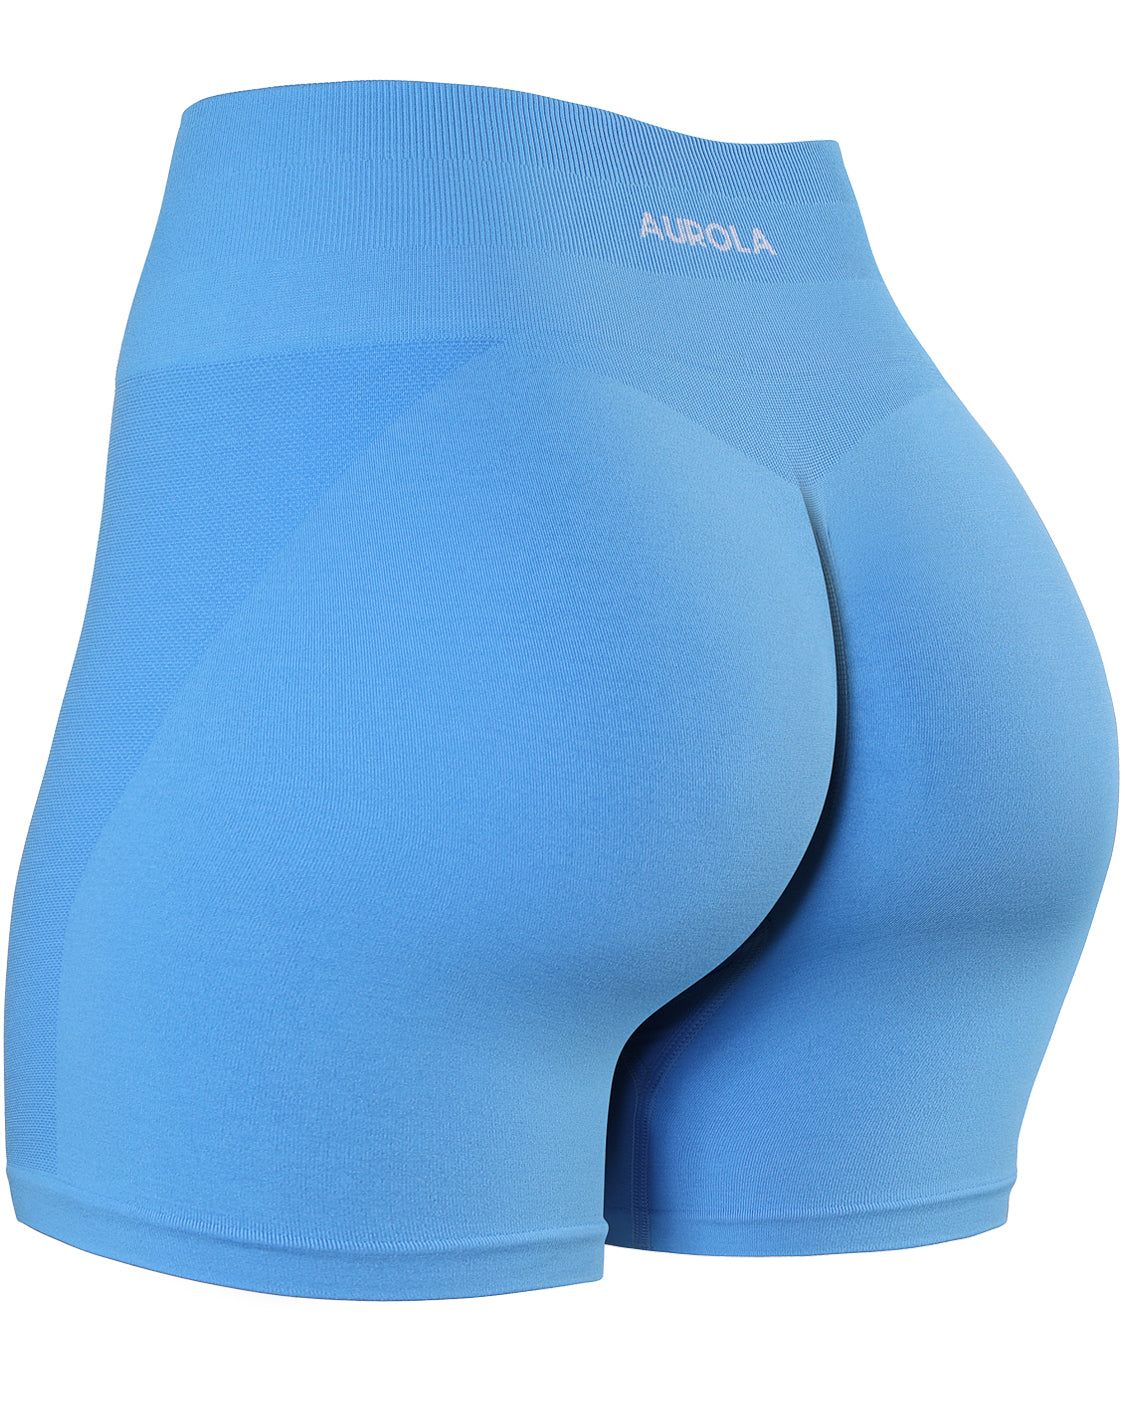 AUROLA Intensify V2.0 3.6 Shorts - Diamond Gusset - Azure Blue / M